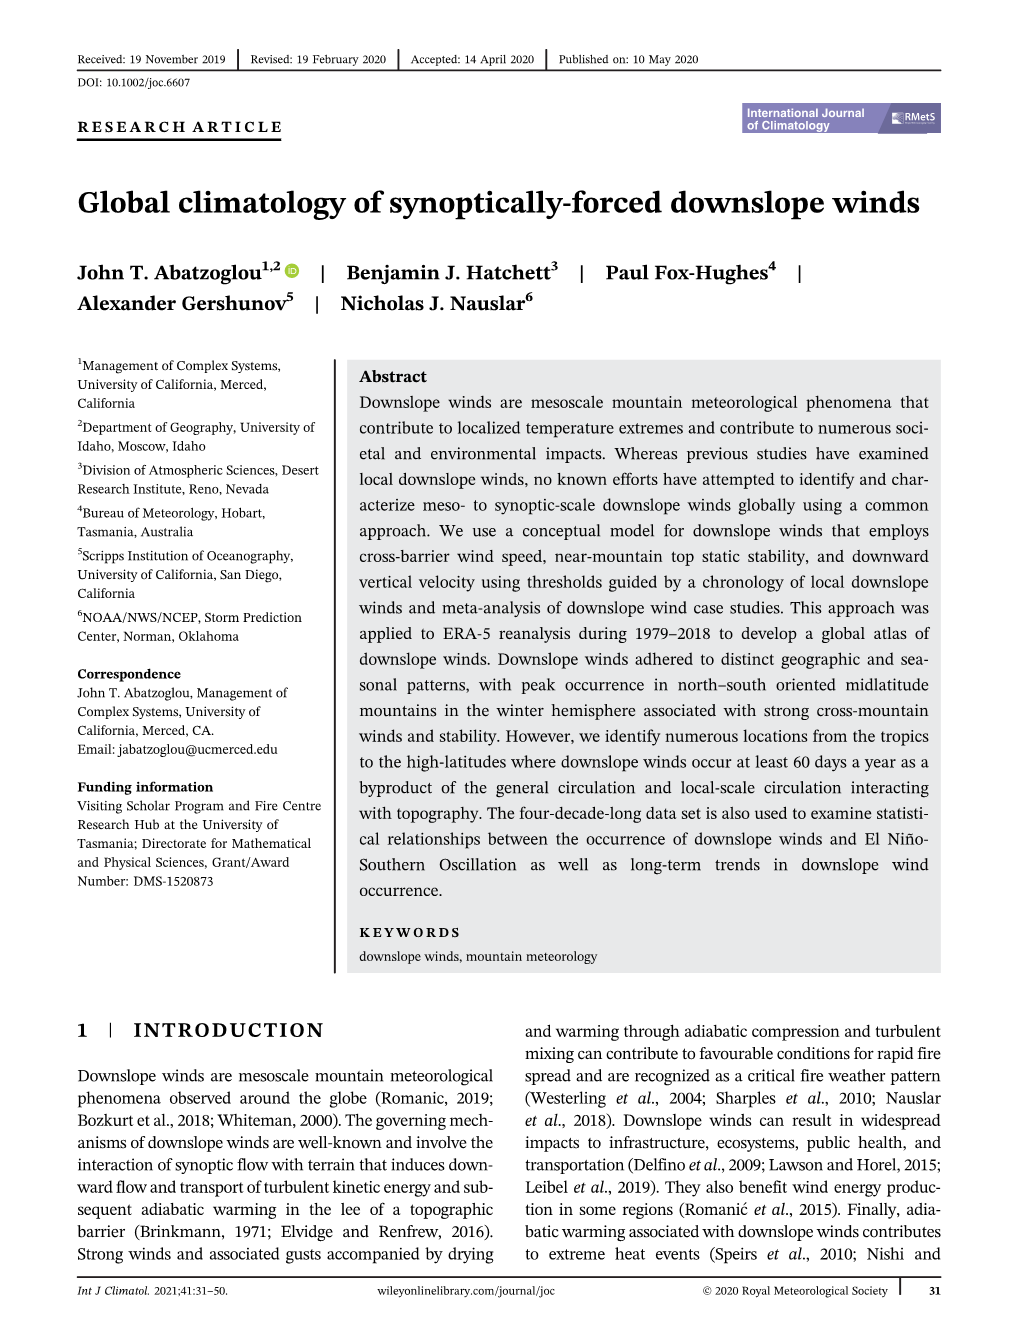 Global Climatology of Synoptically‐Forced Downslope Winds